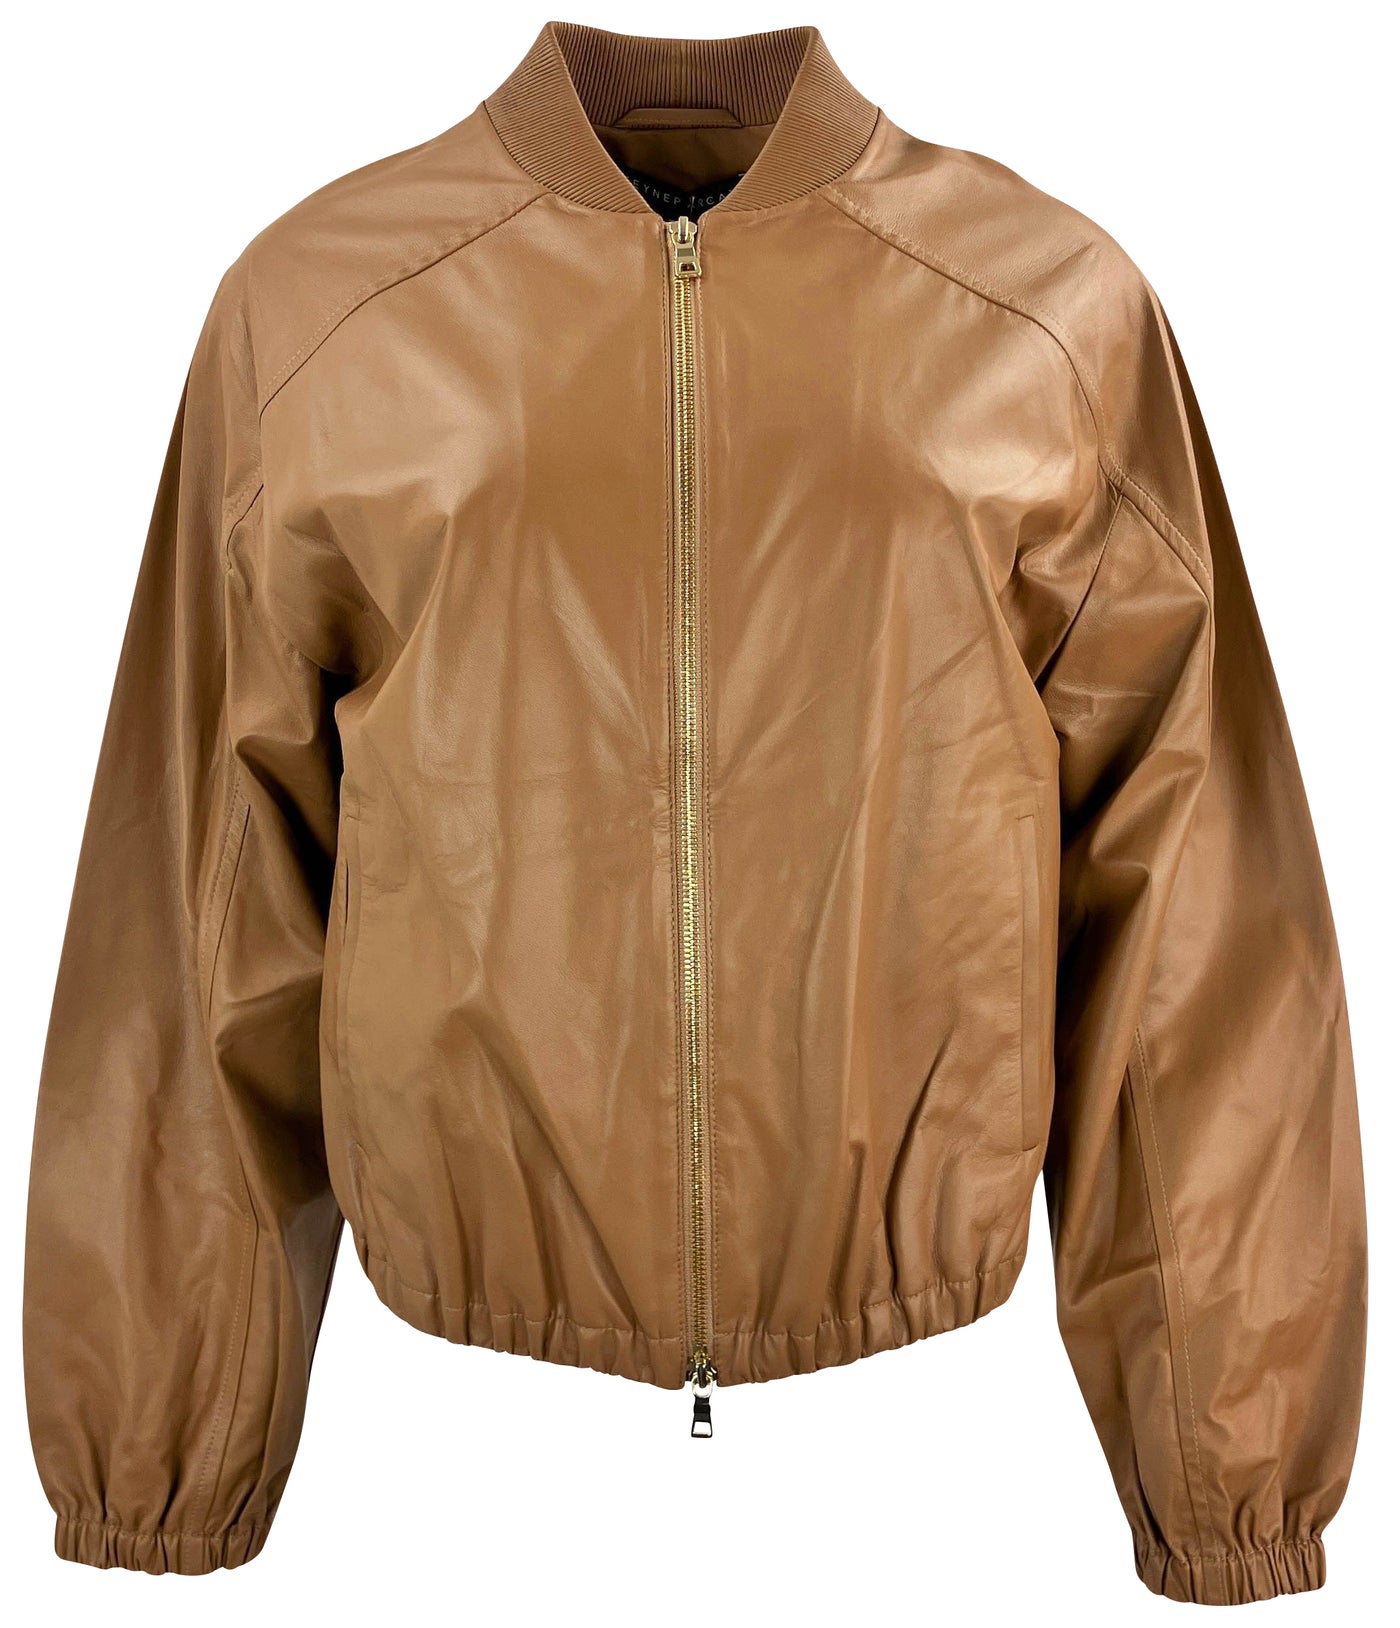 Zeynep Arcay Leather Bomber Jacket in Camel - Discounts on Zeynep Arcay at UAL